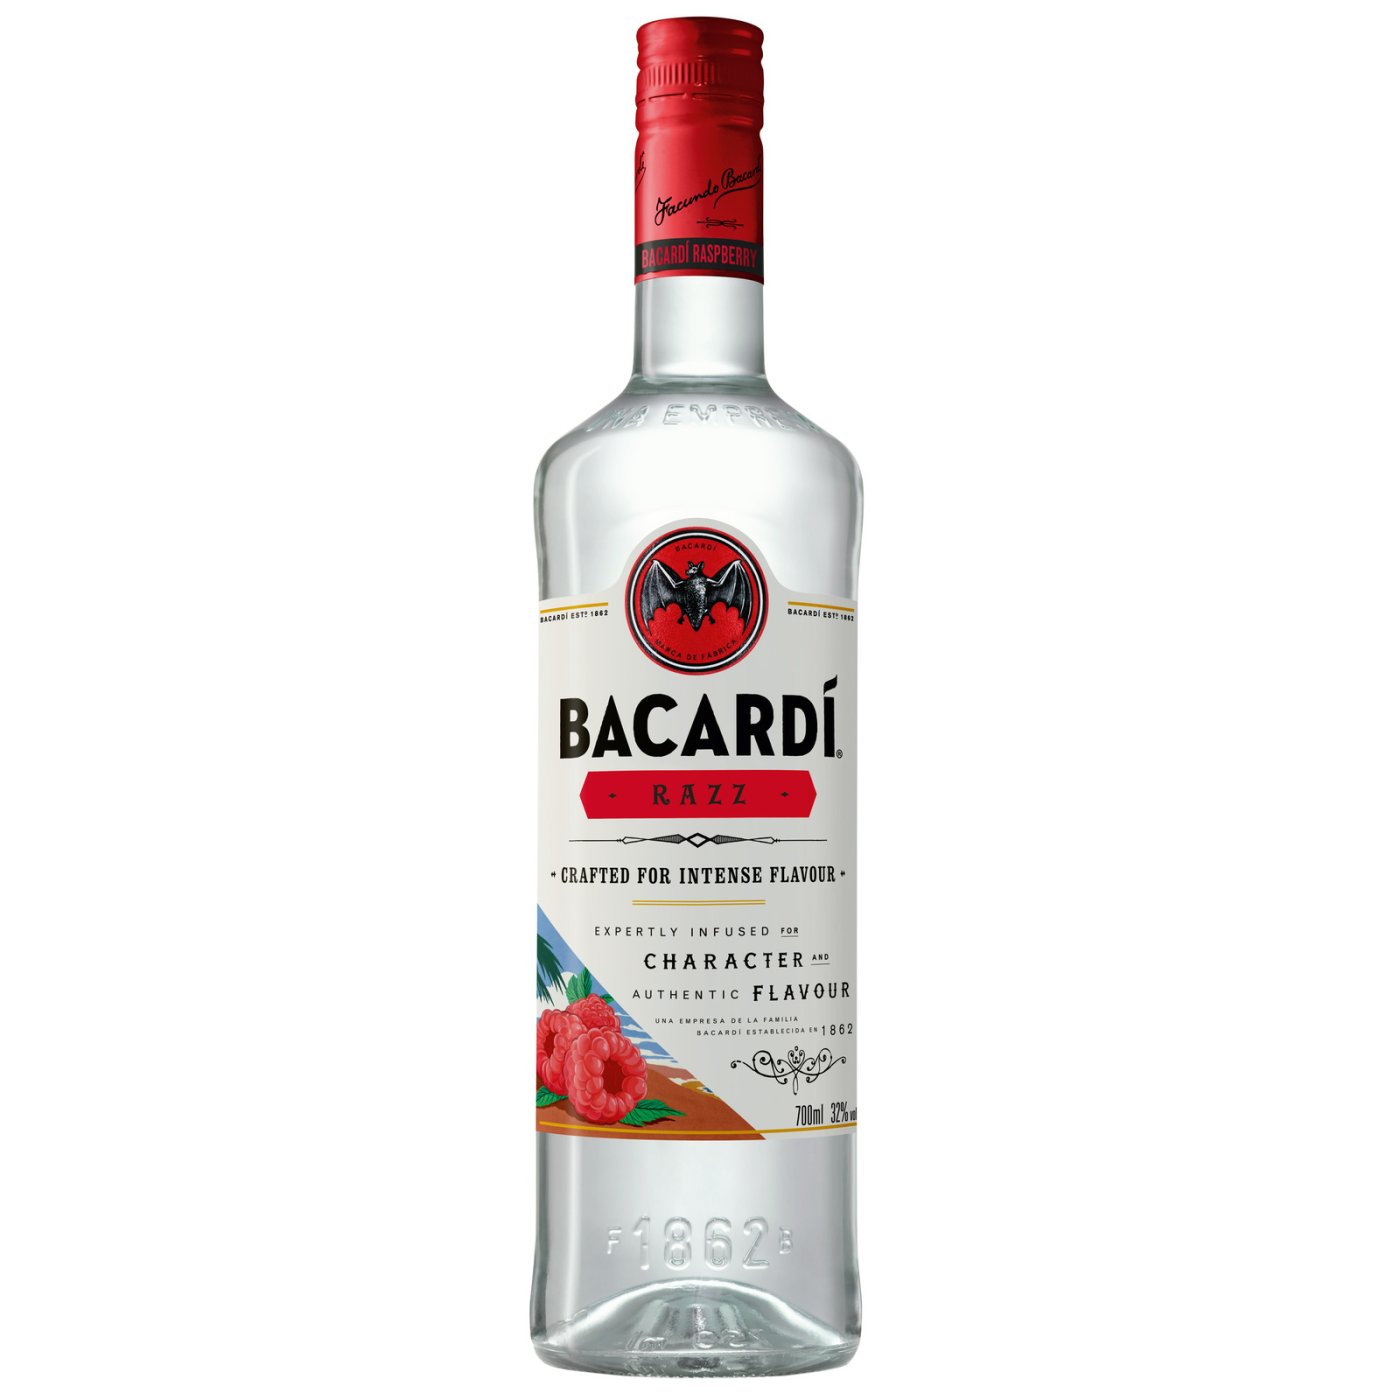 Bacardi - Razz 1 liter